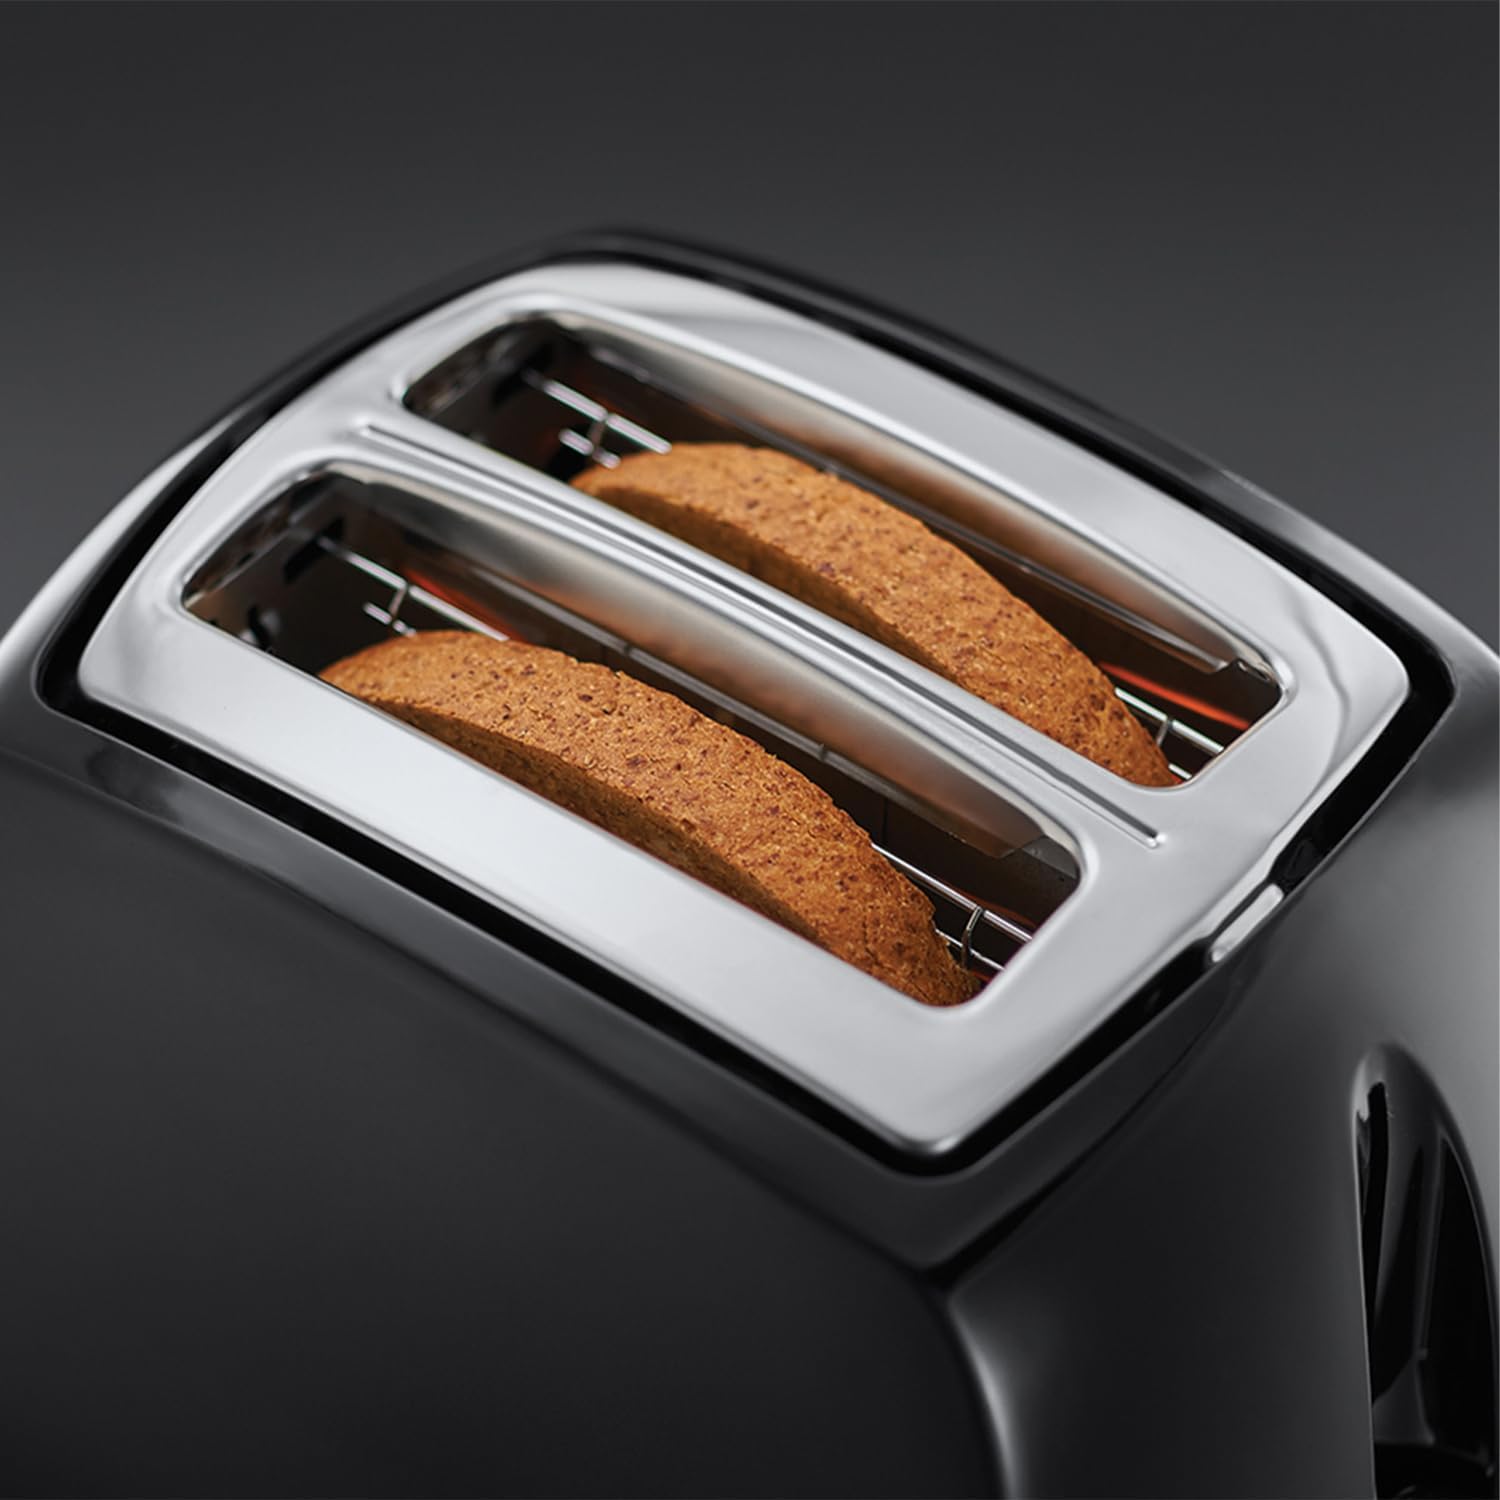 Russell Hobbs 21641 Textures 2-Slice Toaster, 700-850 W, Black